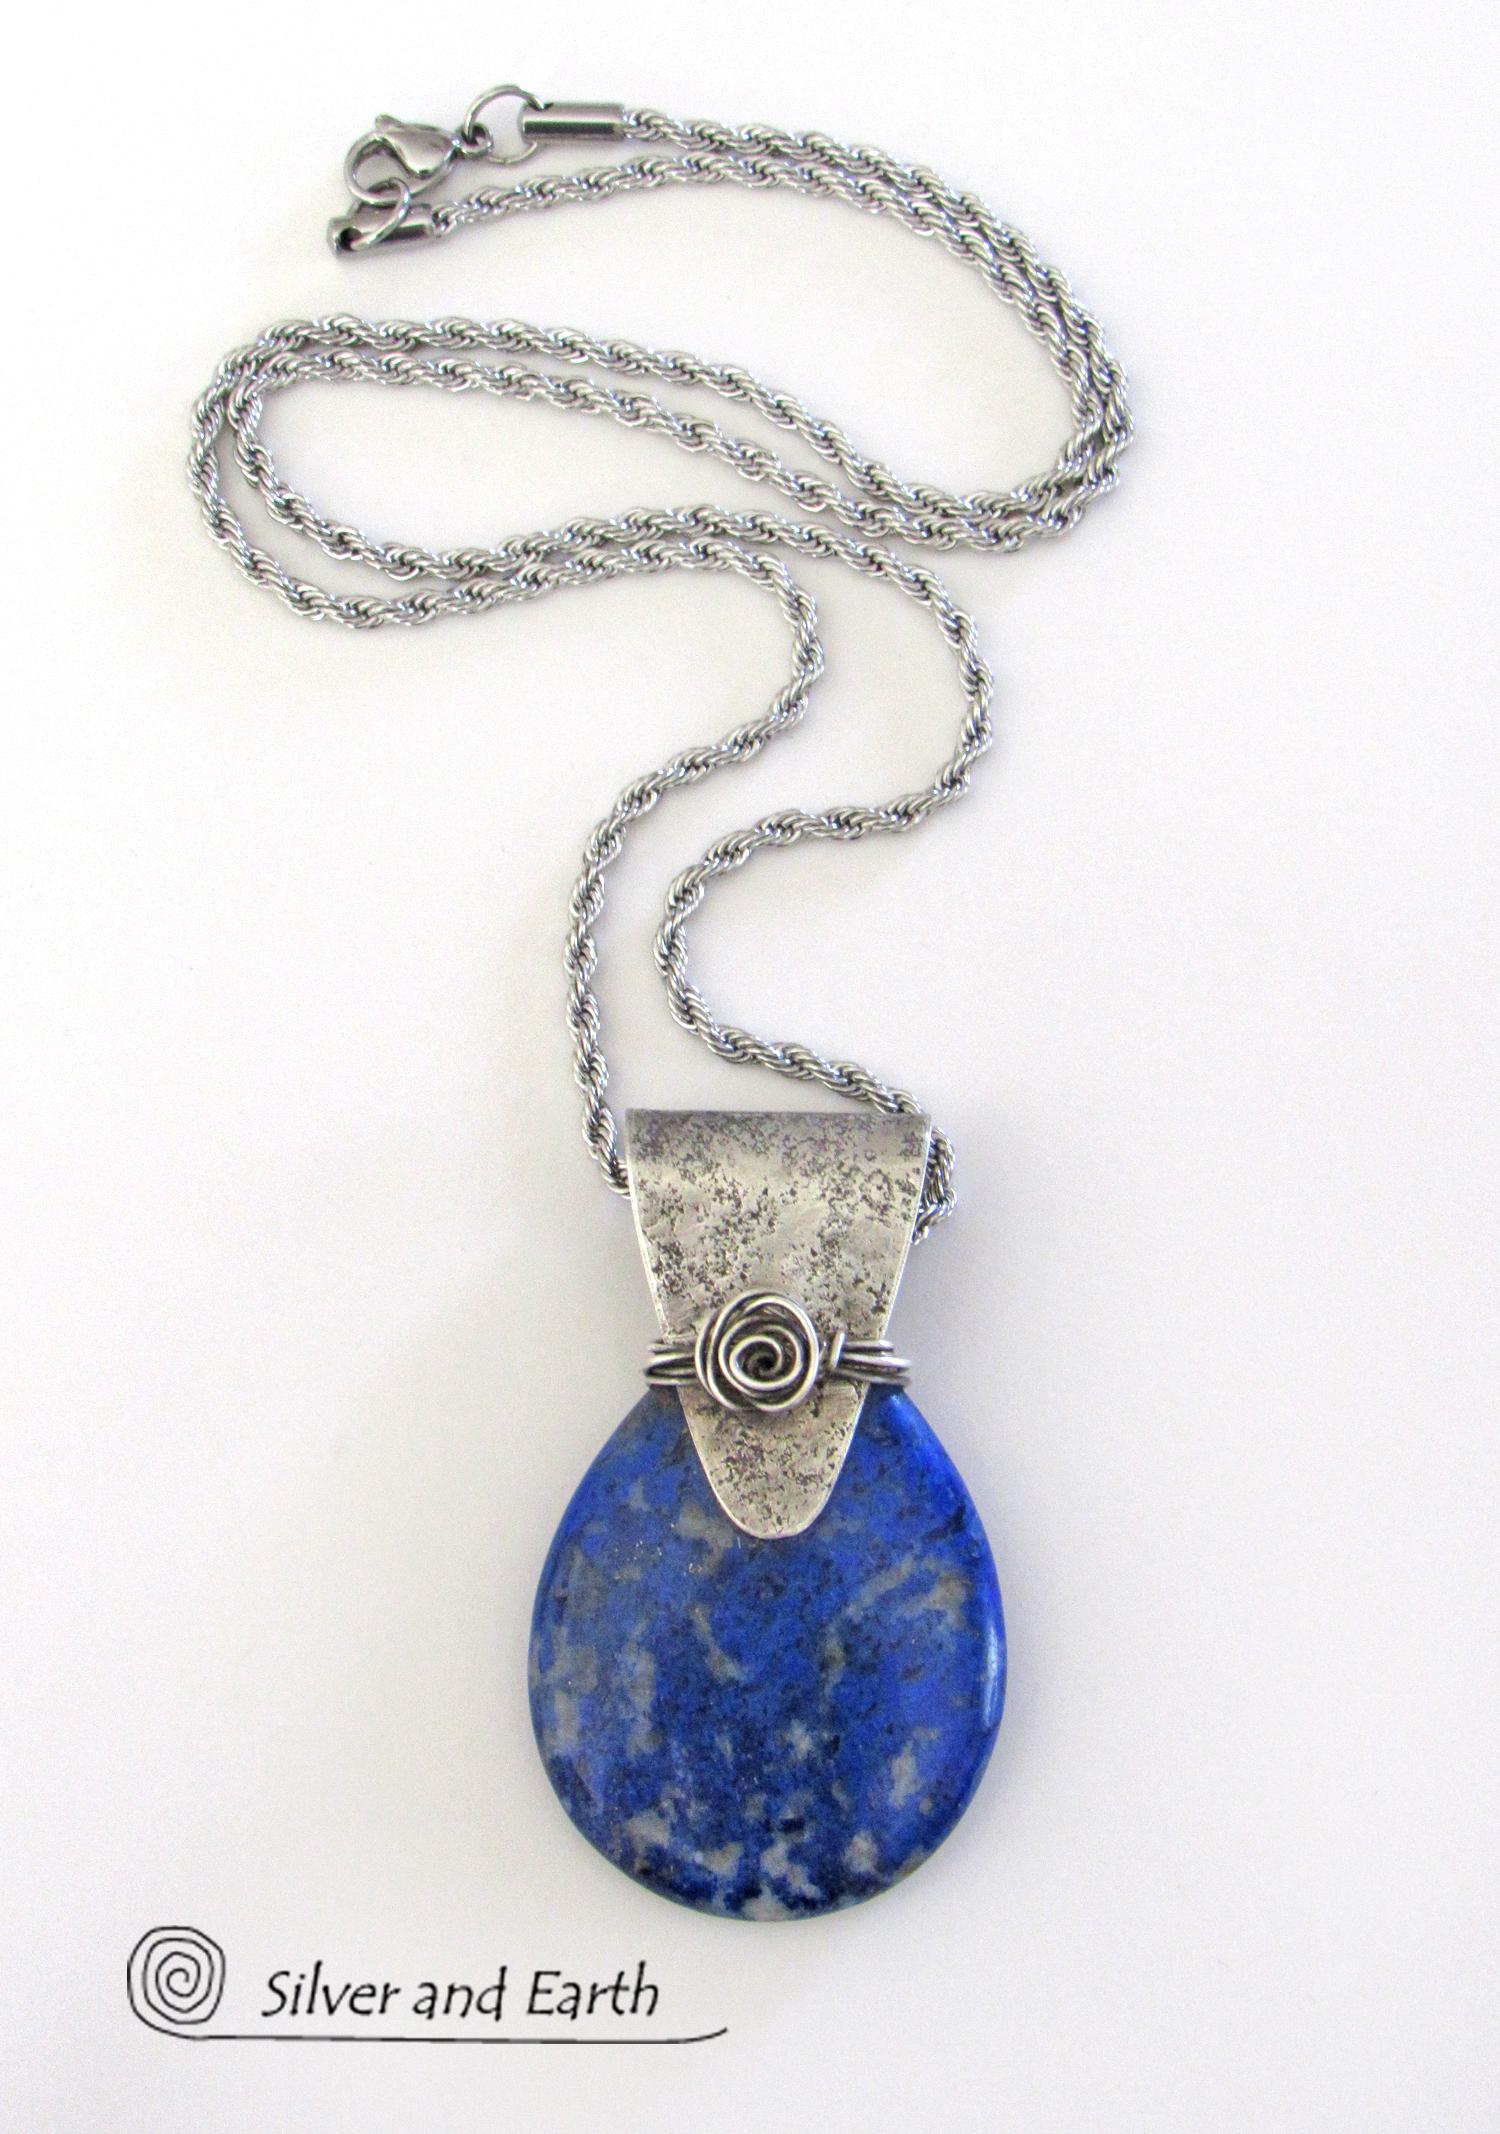 Lapis Lazuli Sterling Silver Pendant Necklace - Unique Handmade Silver Jewelry